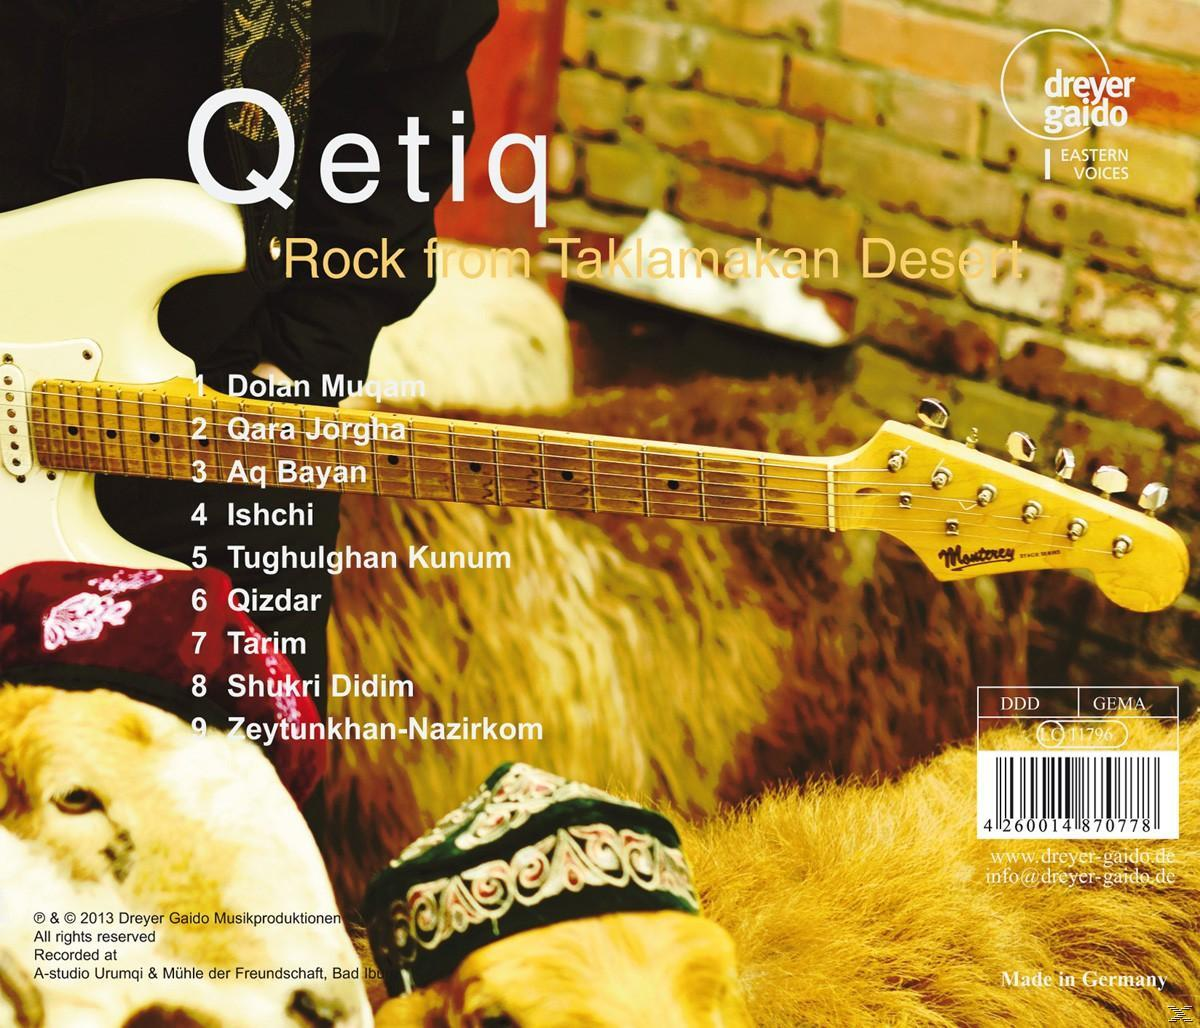 Qetiq Aus (CD) Der - Qetiq-Rock - Taklamakan-Wüste